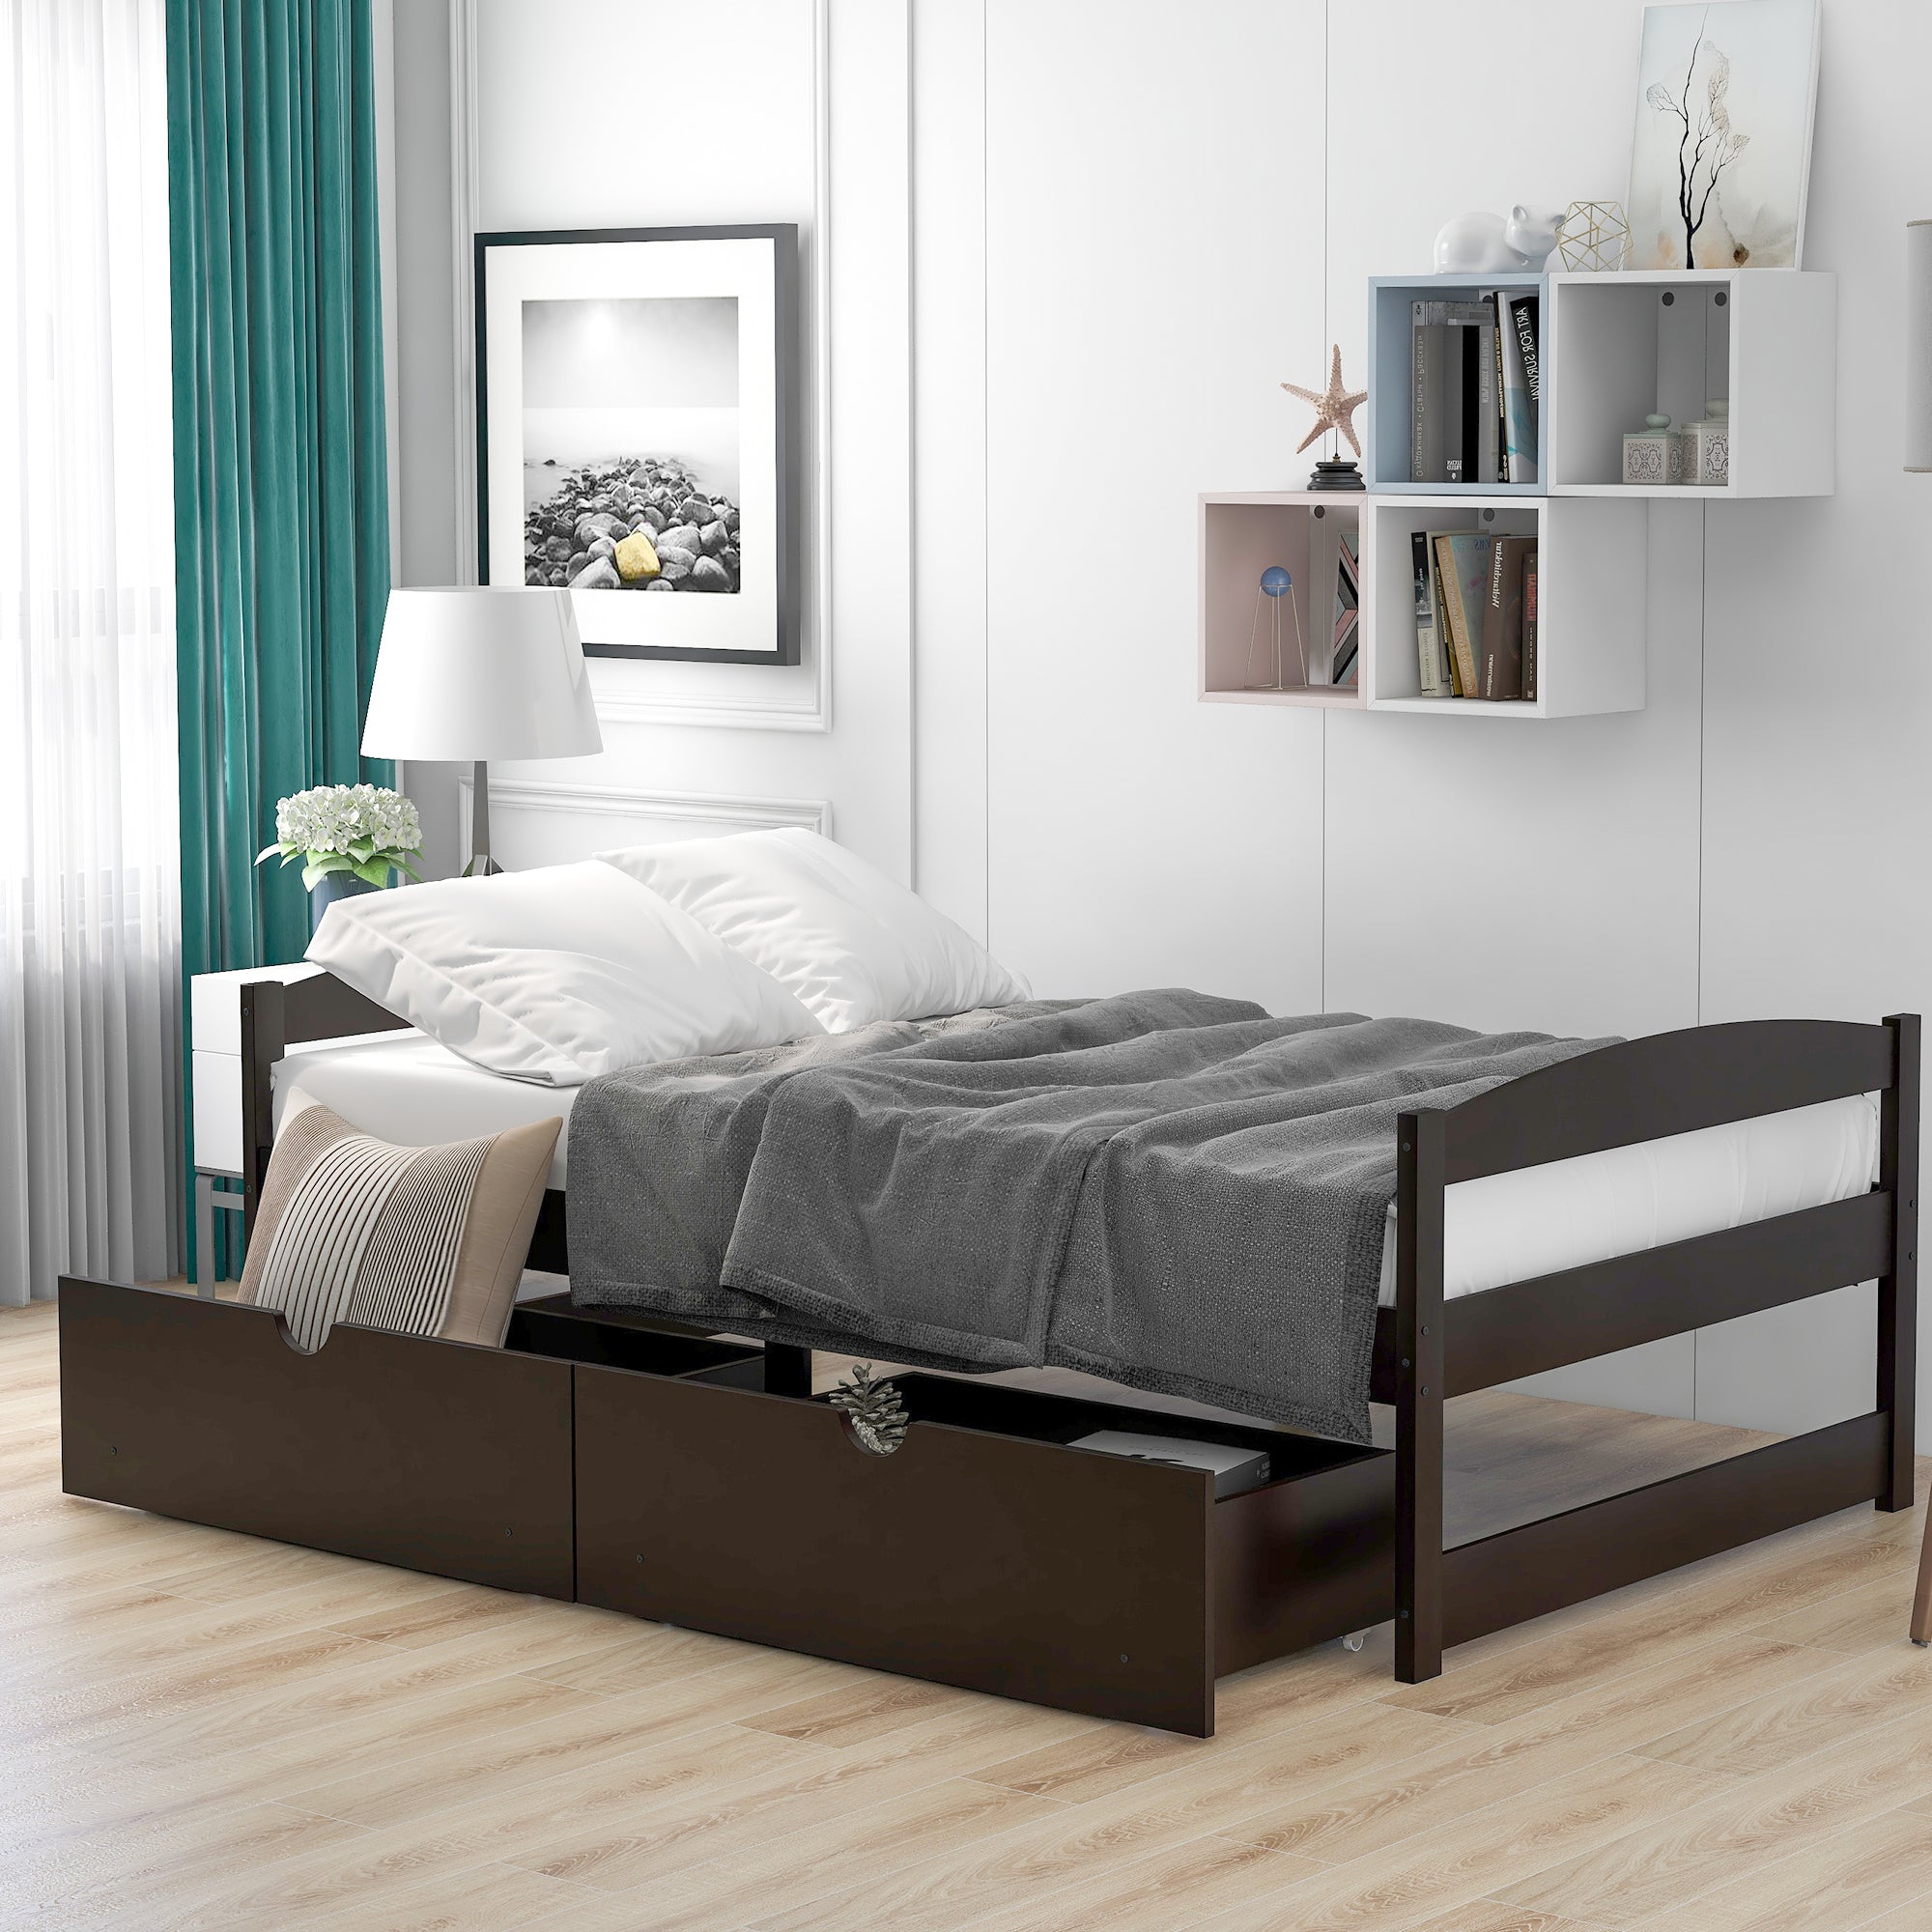 Twin size platform bed, with two drawers, espresso espresso-pine